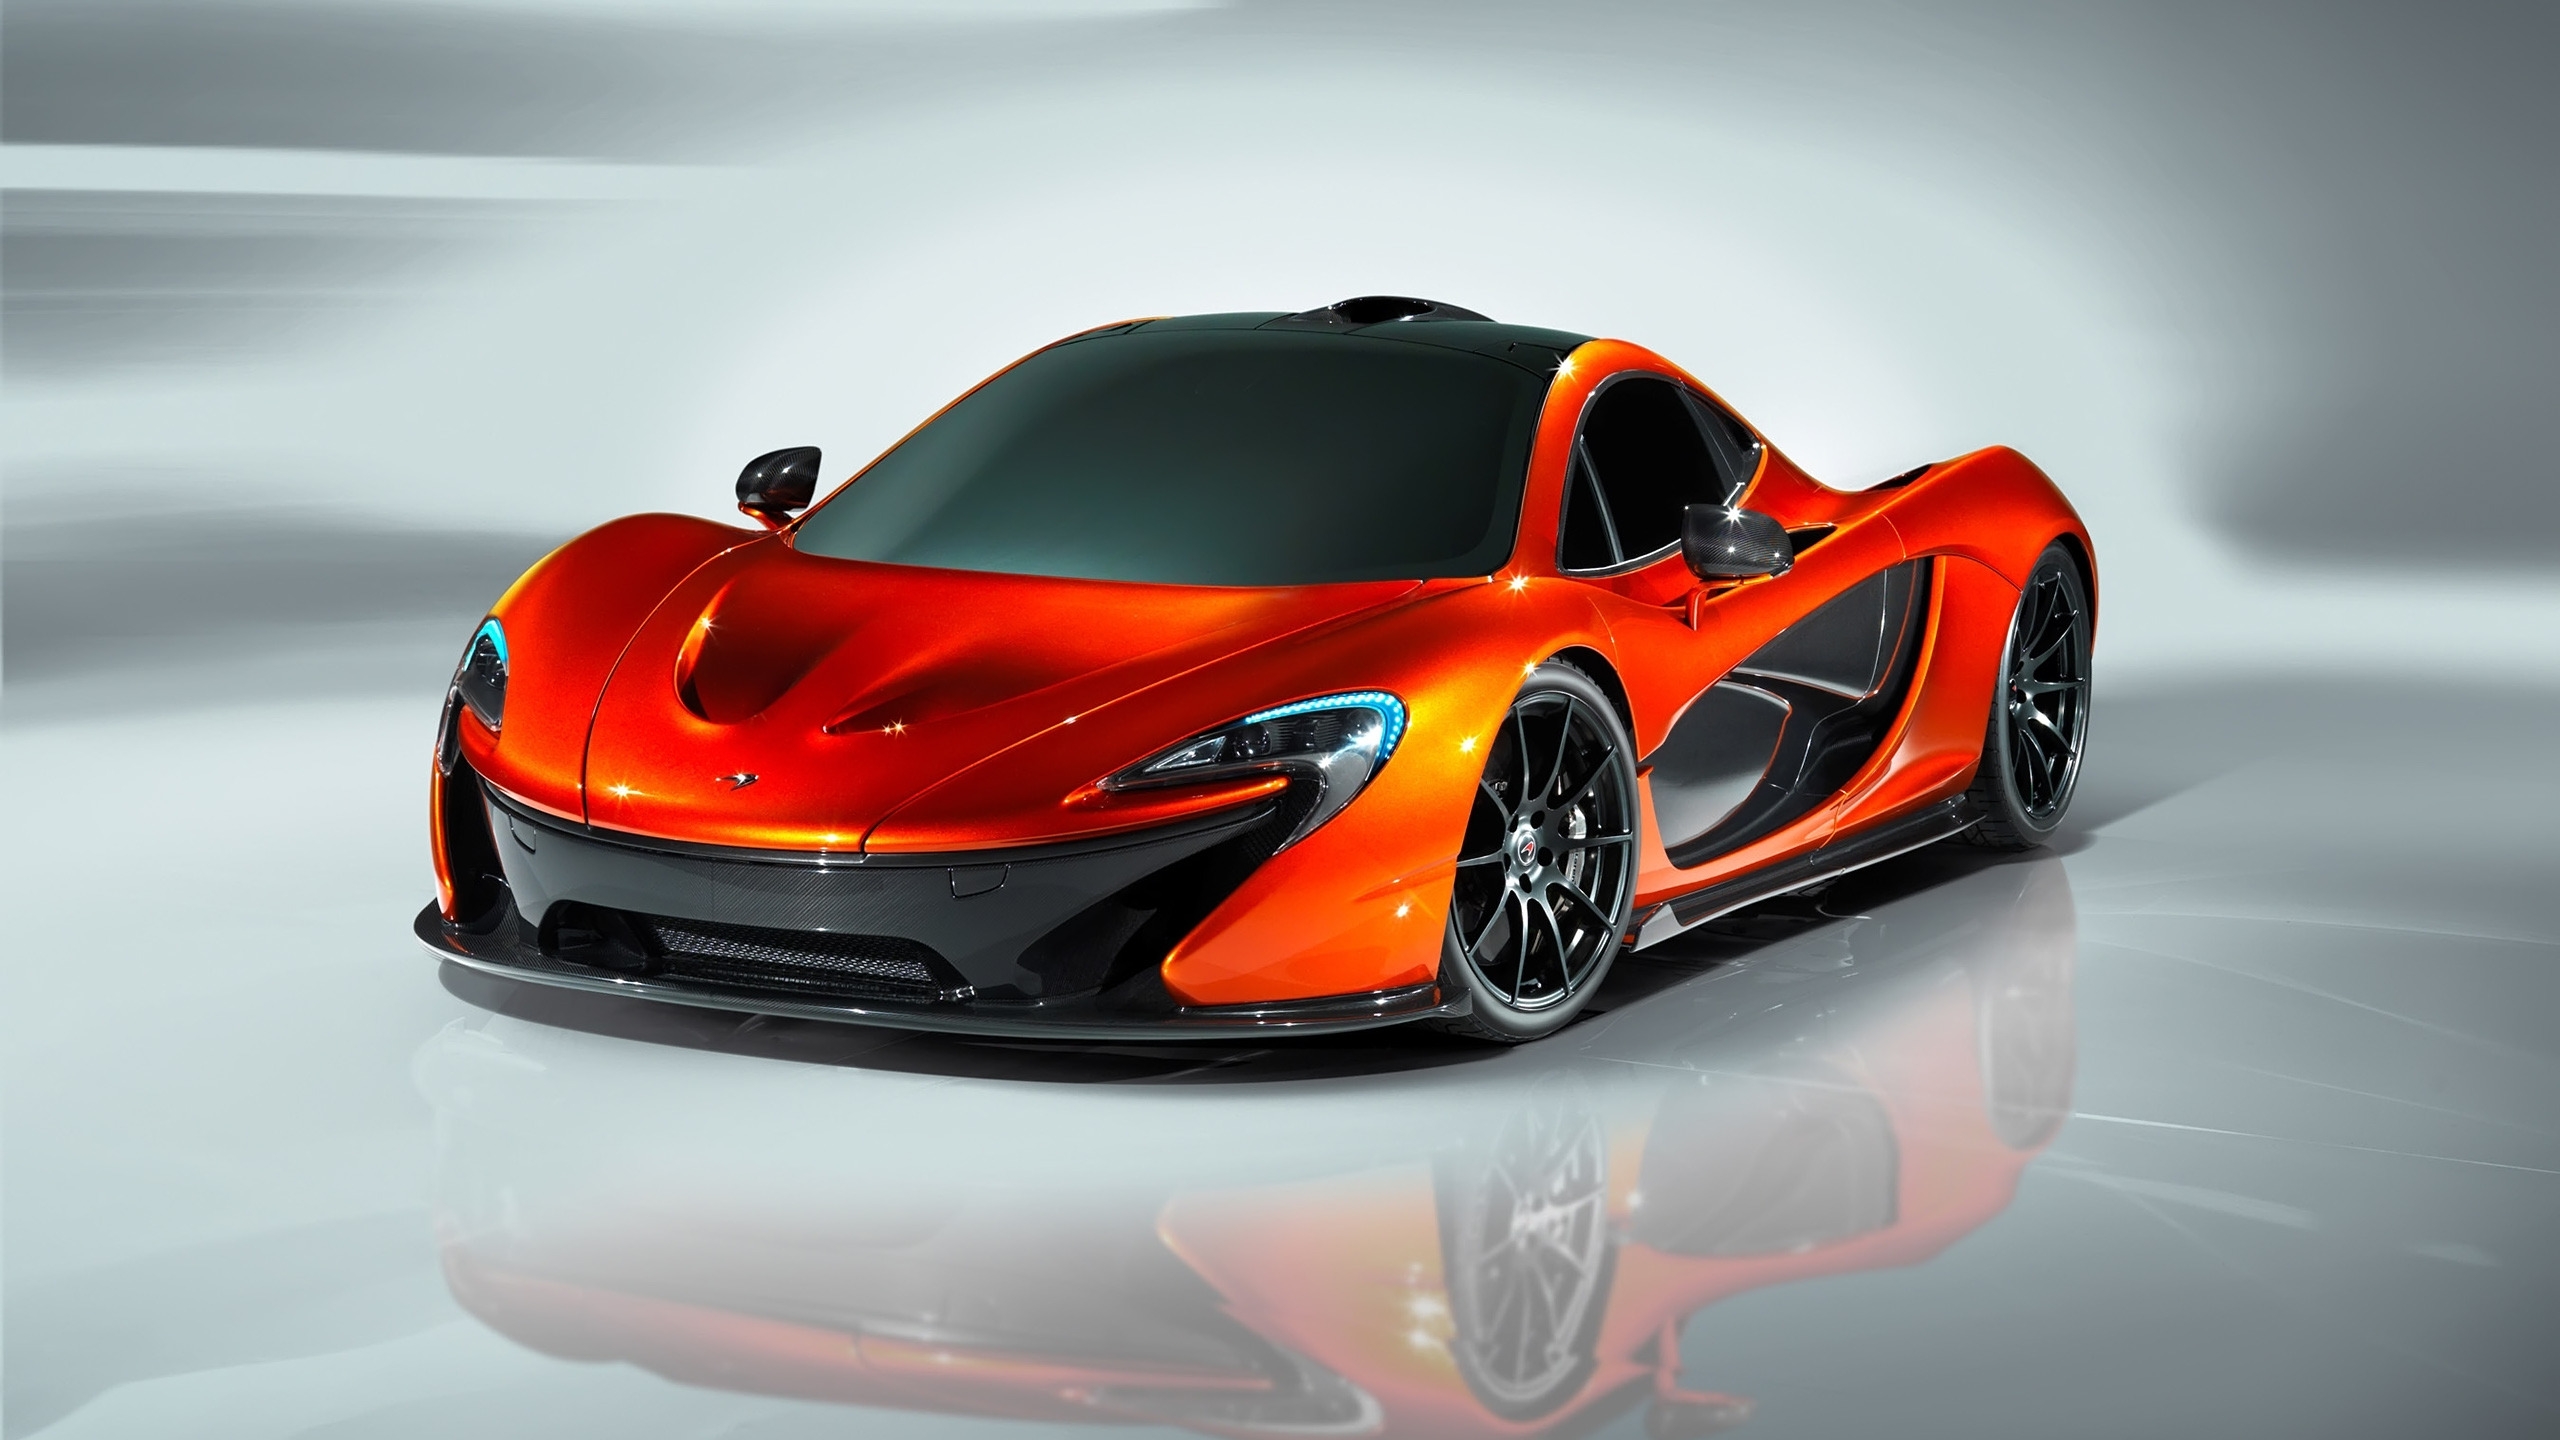 McLaren P1 Concept for 2560x1440 HDTV resolution